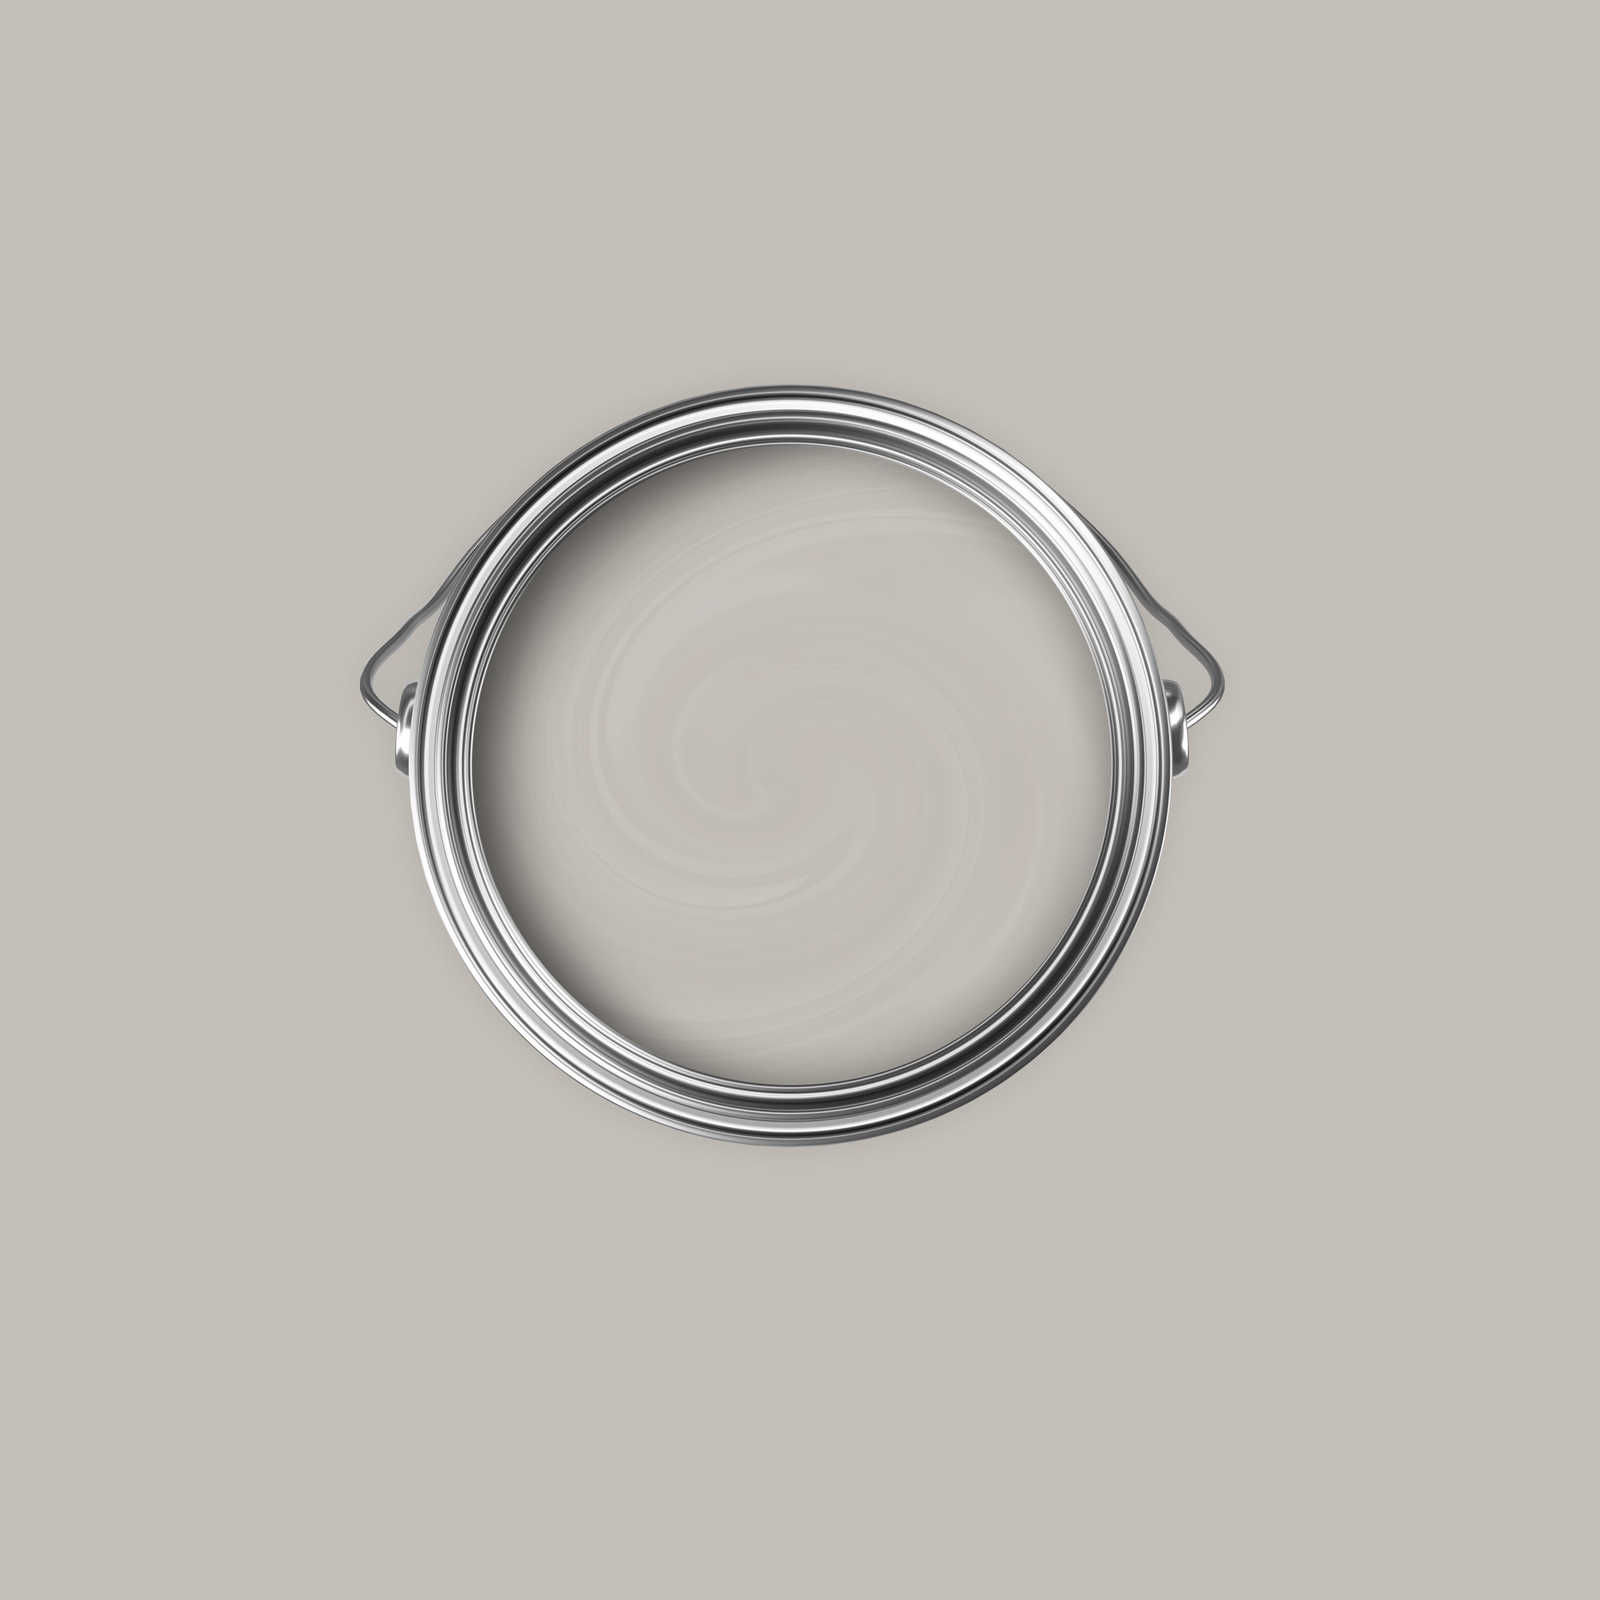             Premium Wall Paint soft silk grey »Creamy Grey« NW111 – 2,5 litre
        